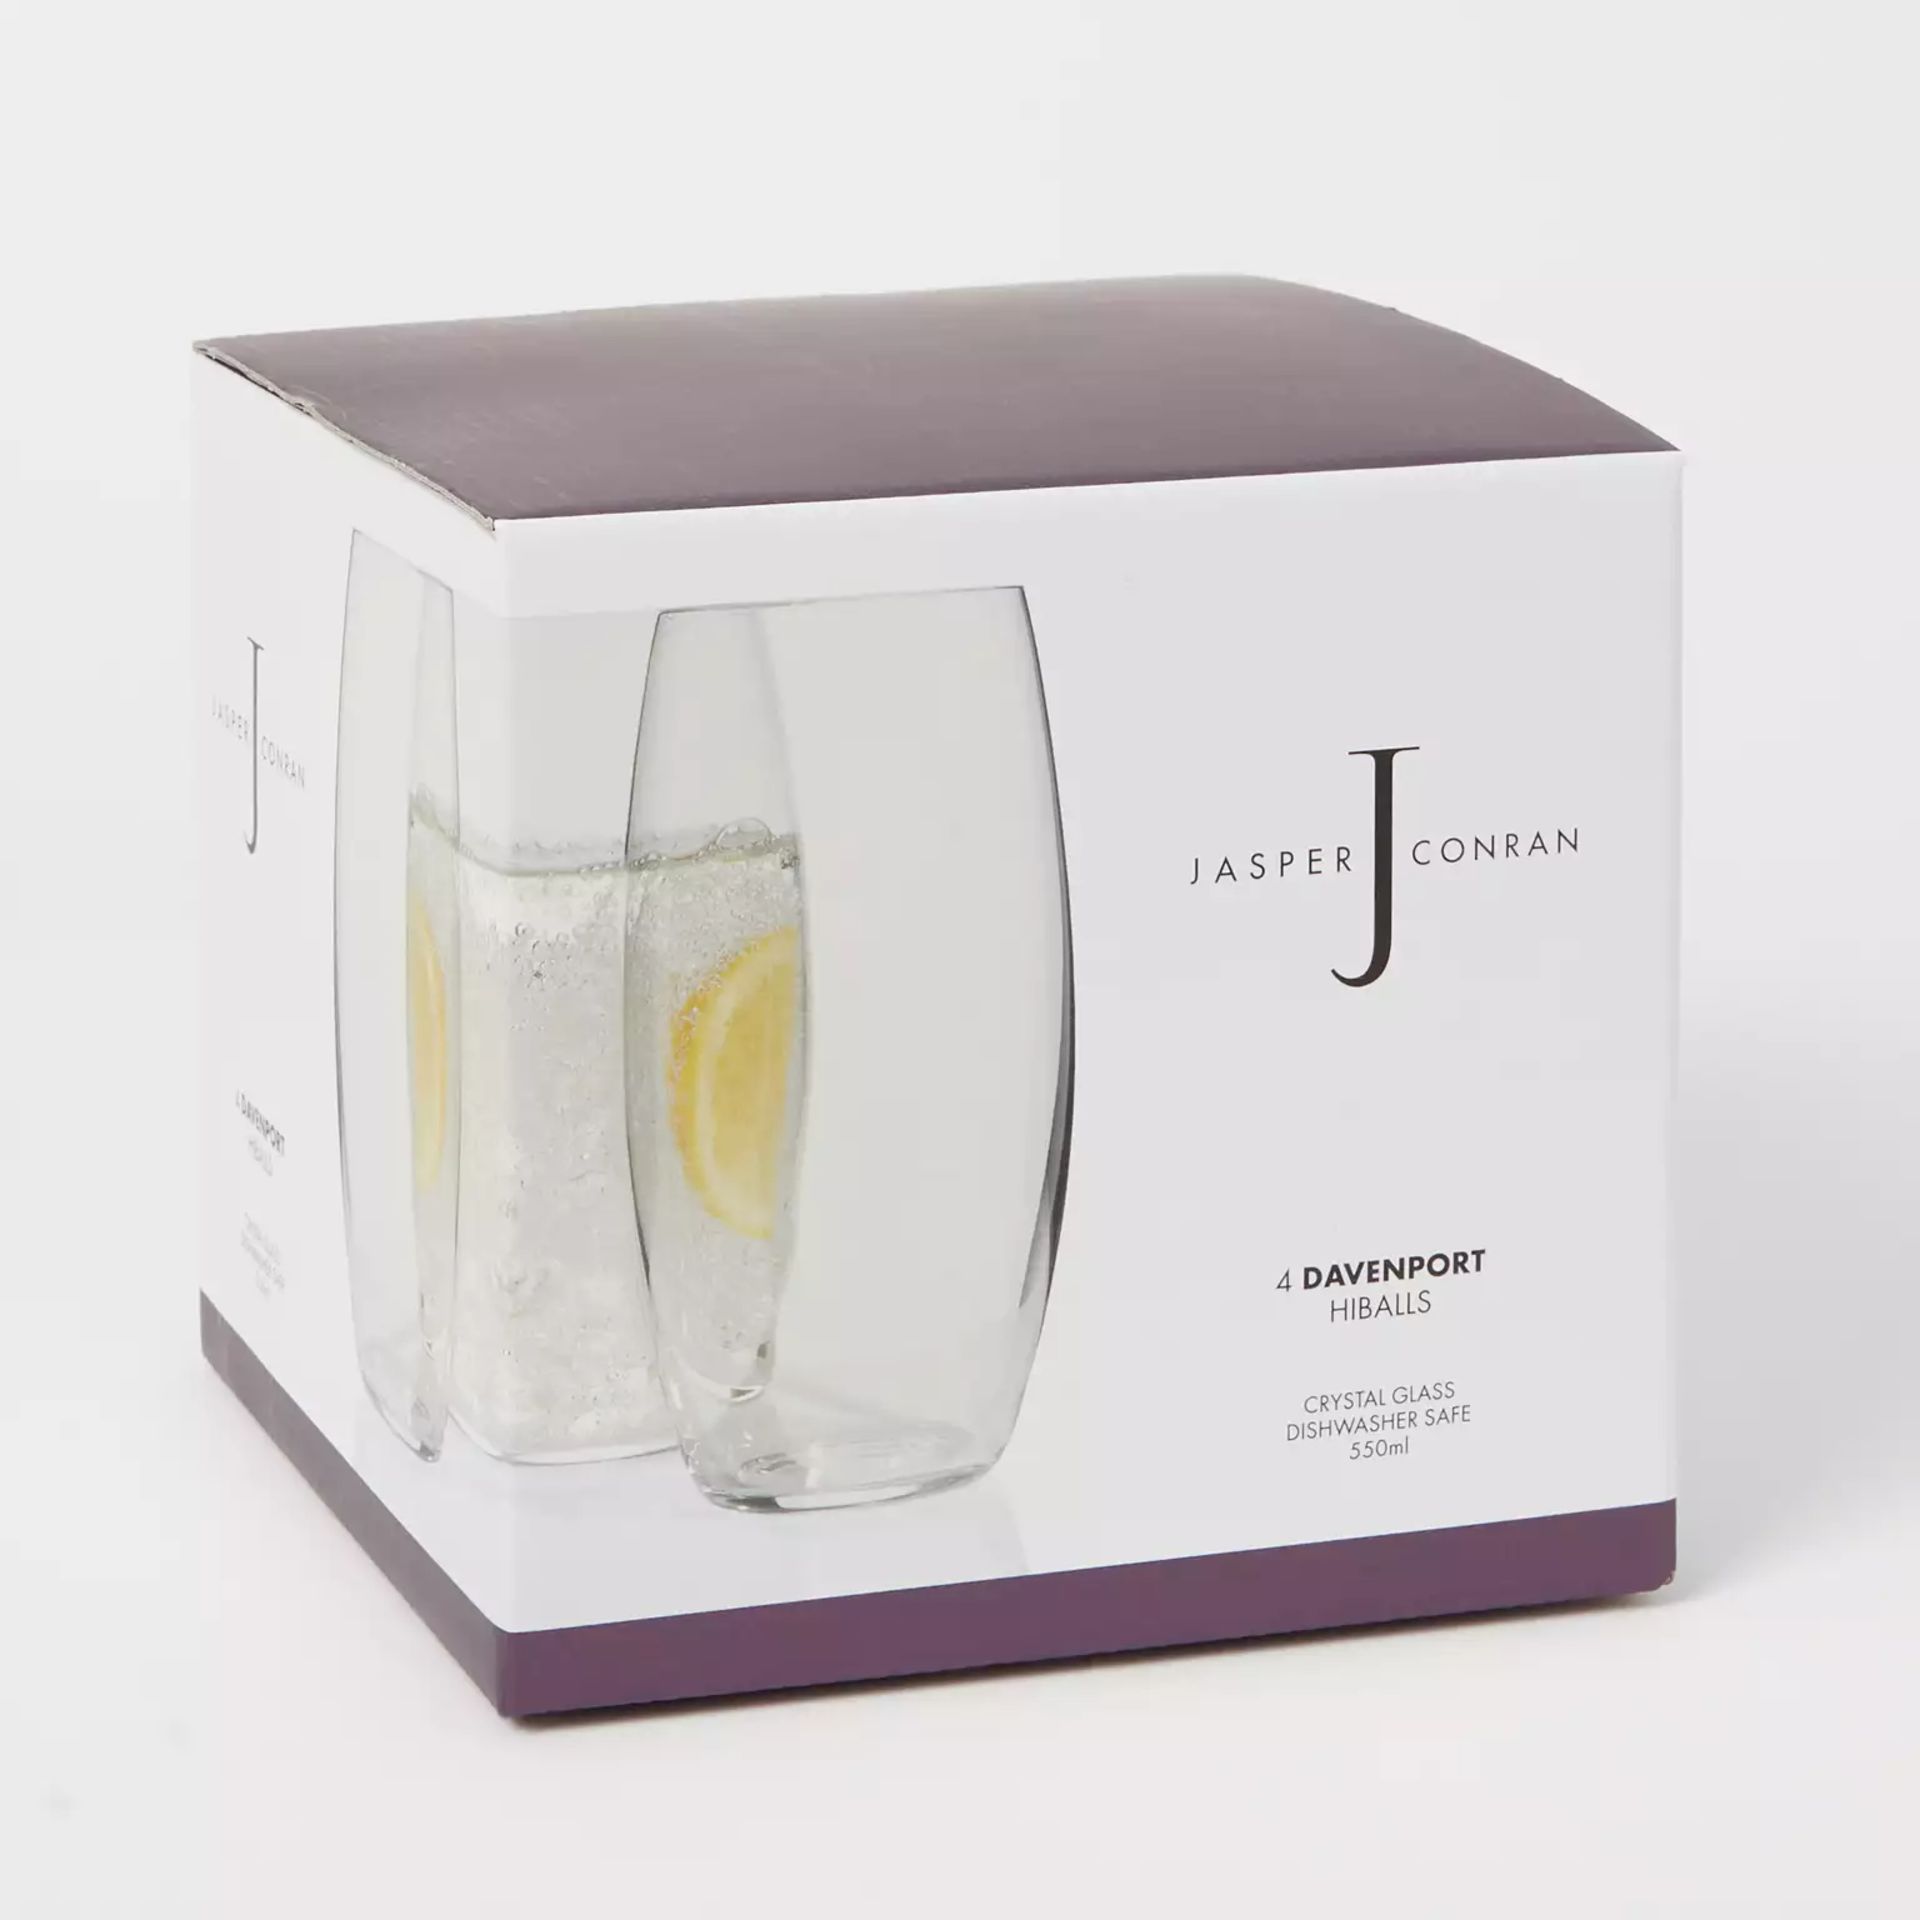 Brand New Debenhams Jasper Conran - Set of 4 'Davenport' Hiball Crystal Glasses - RRP £25.